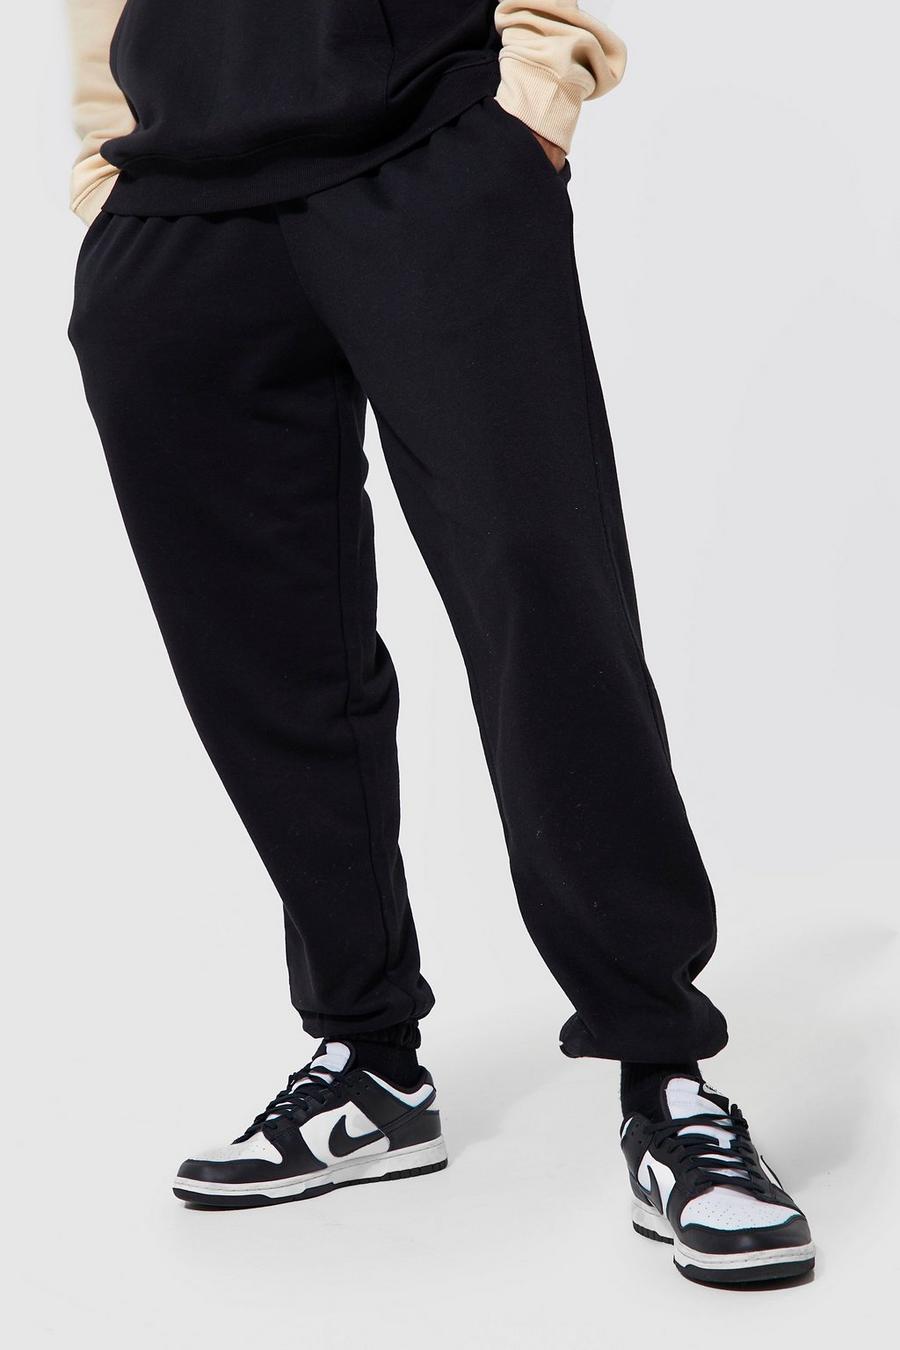 Pantalón deportivo Tall básico holgado con algodón ecológico, Black image number 1